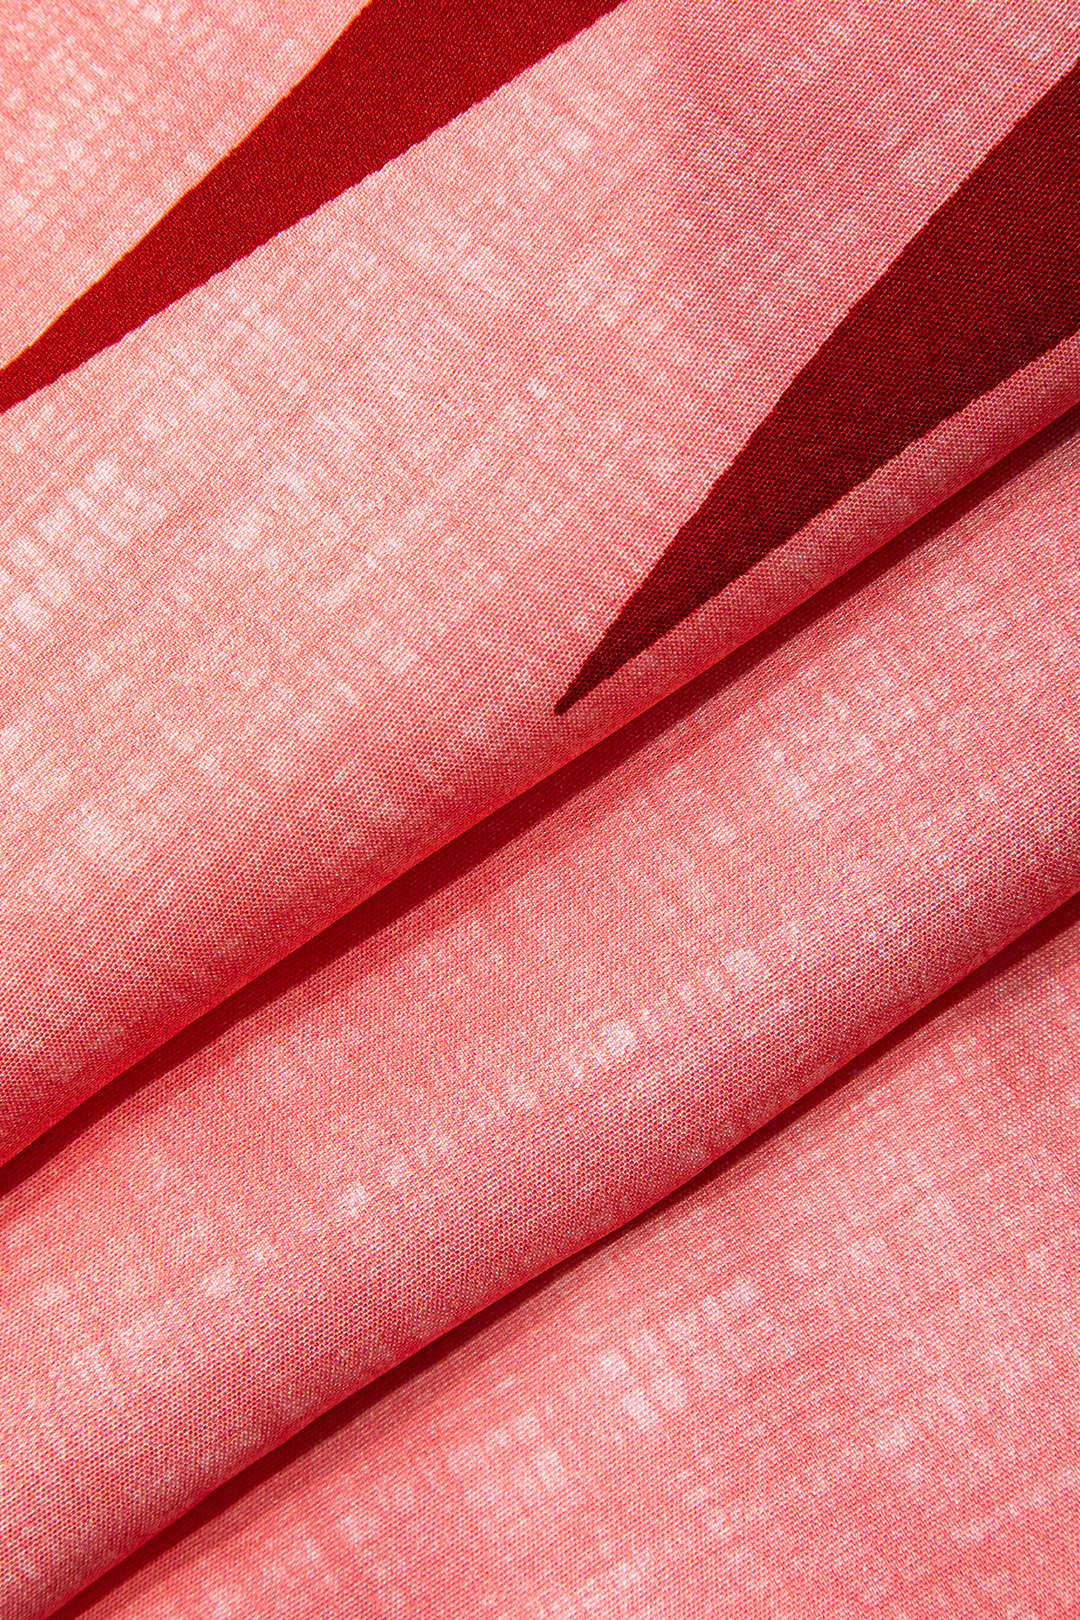 Bamboo Leaf Print Knot Cami Top And Pants Set